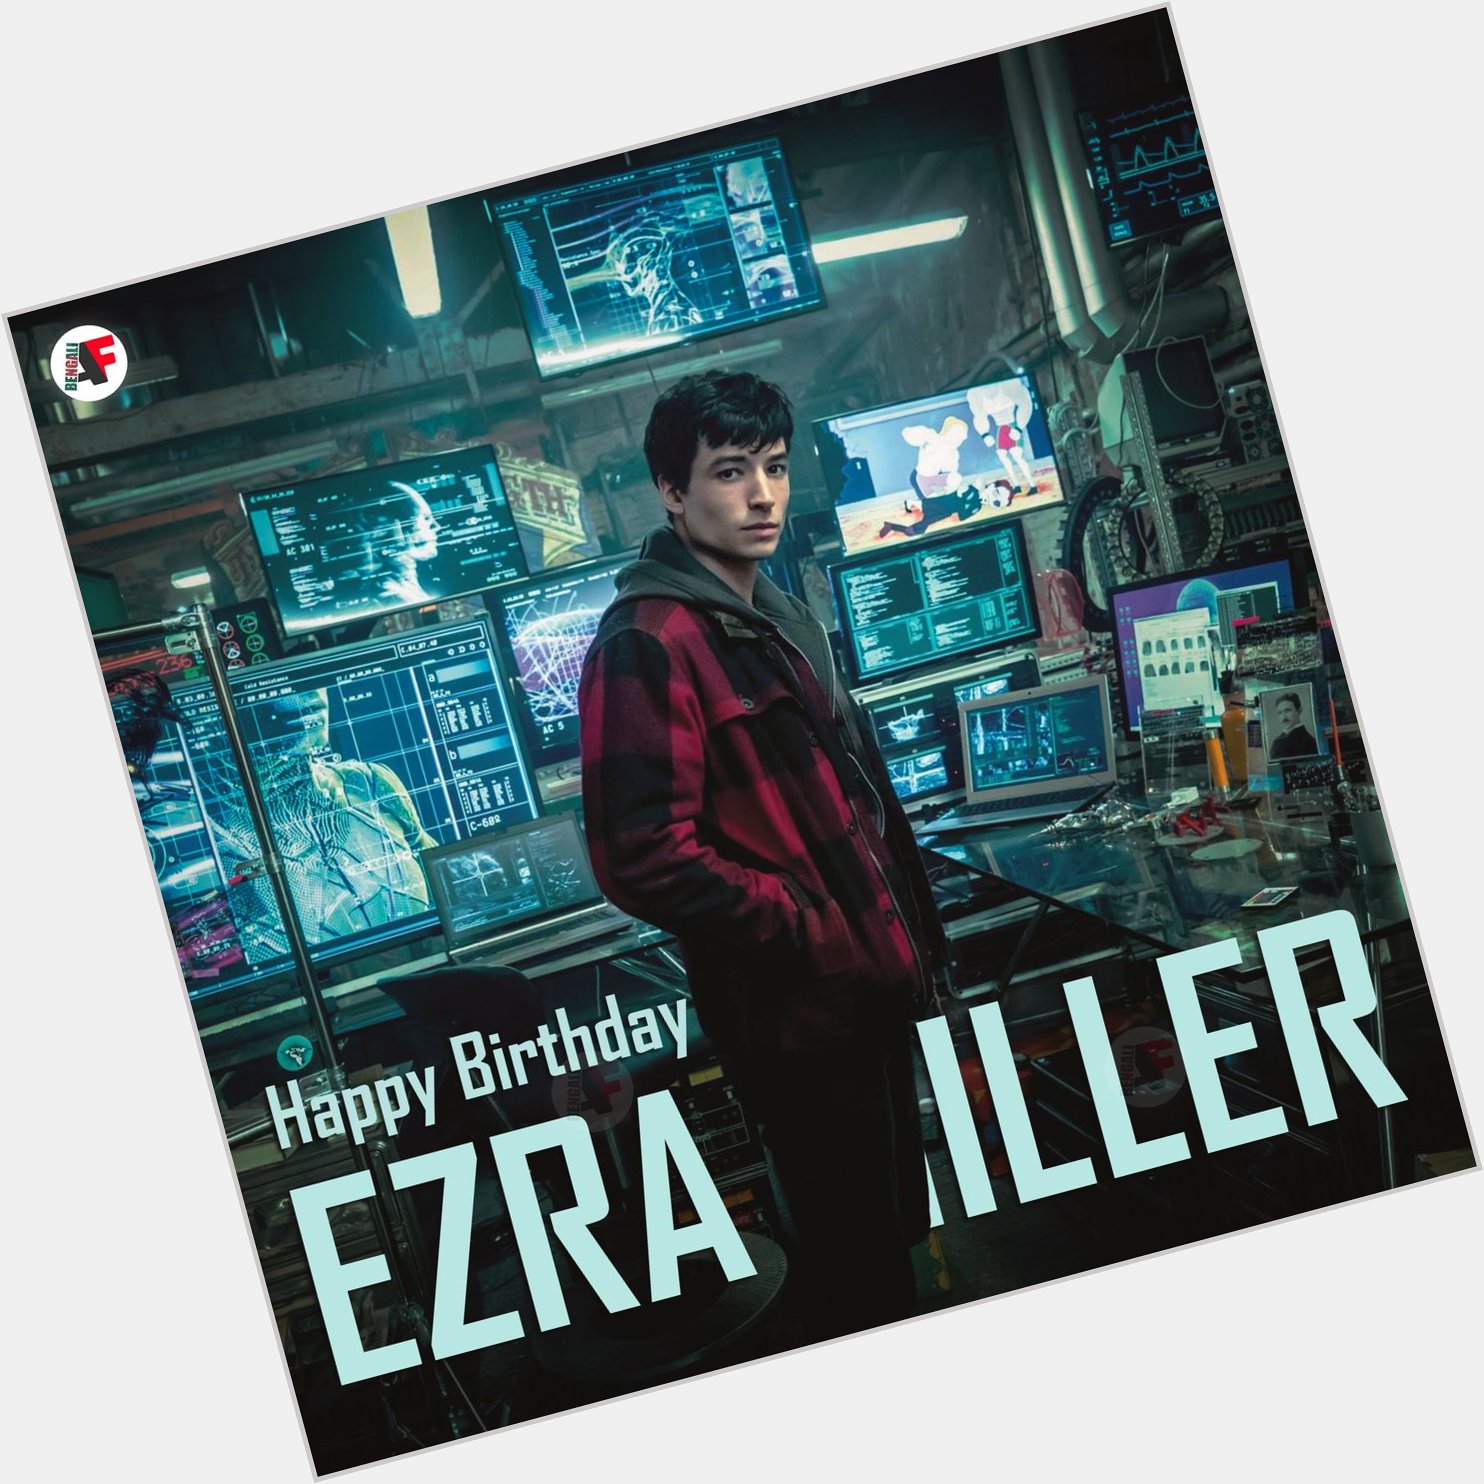 Happy Birthday Ezra Miller aka The Flash    